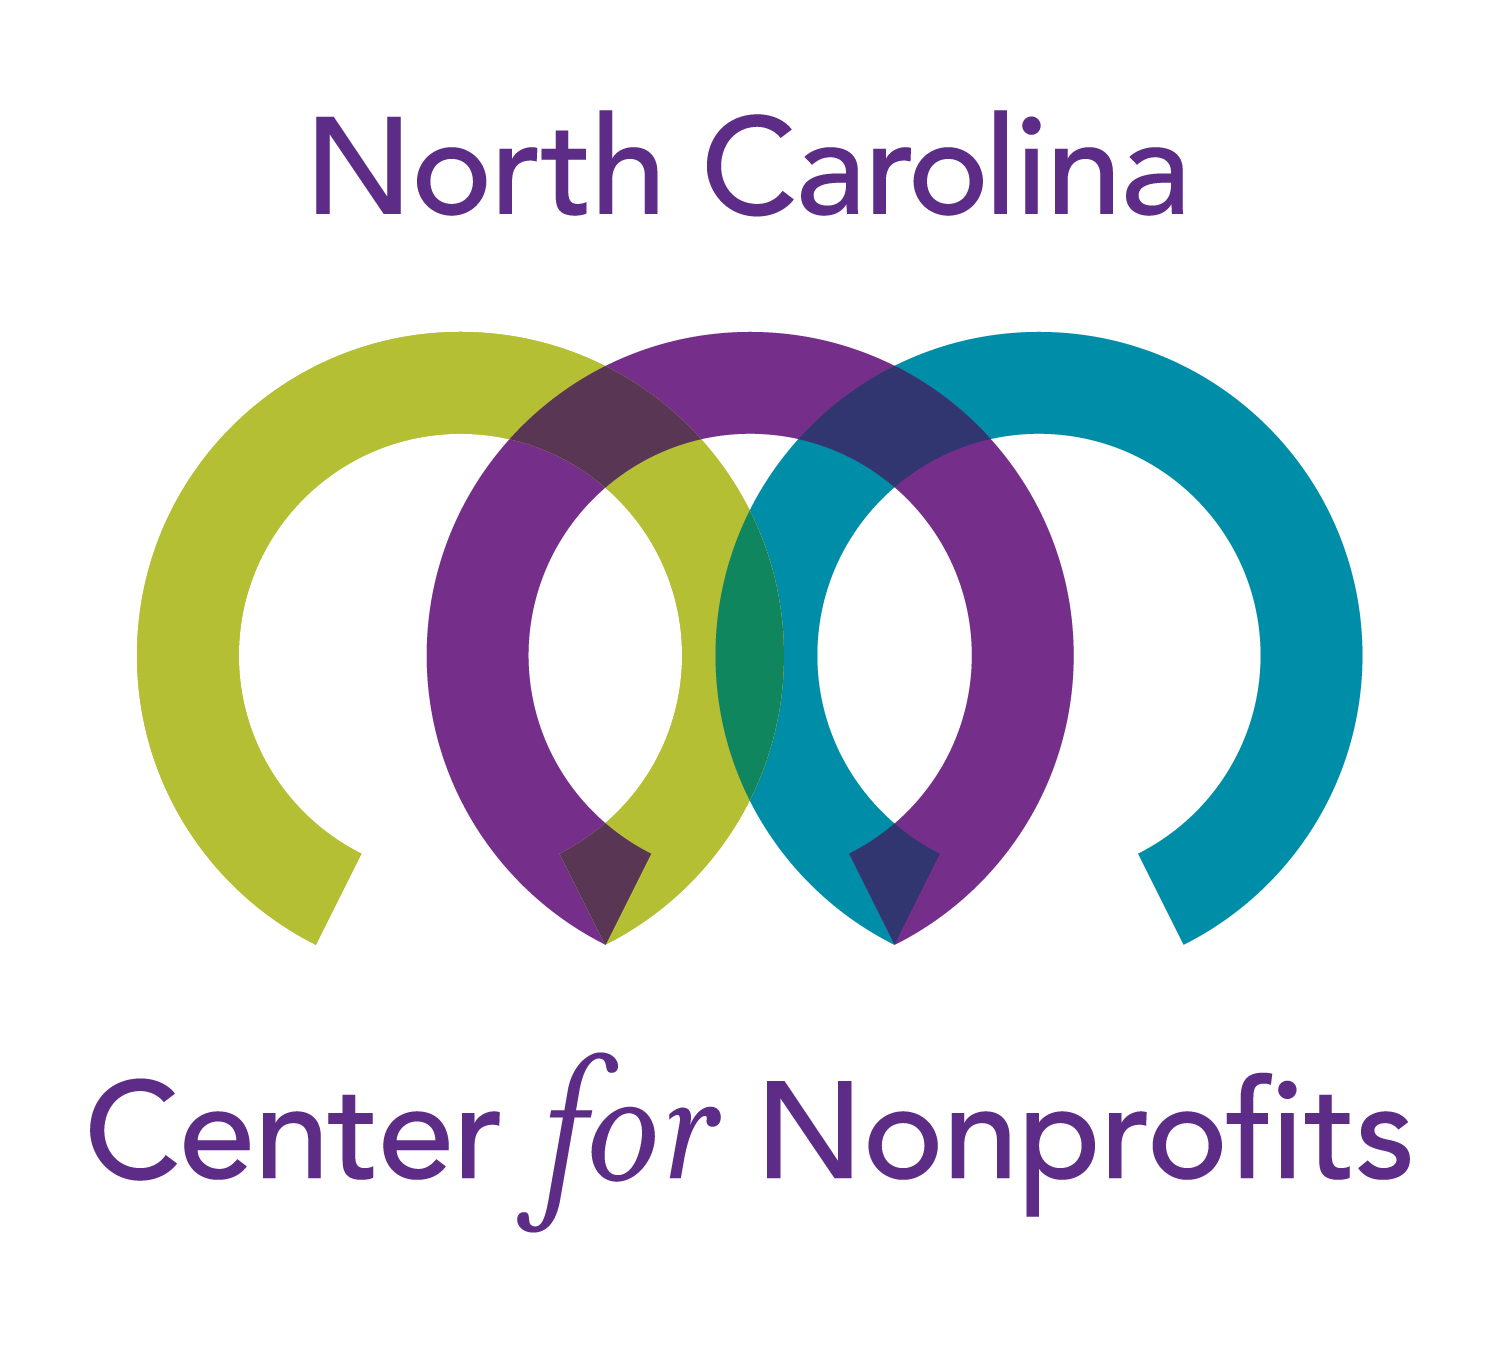 North Carolina Center for Nonprofits